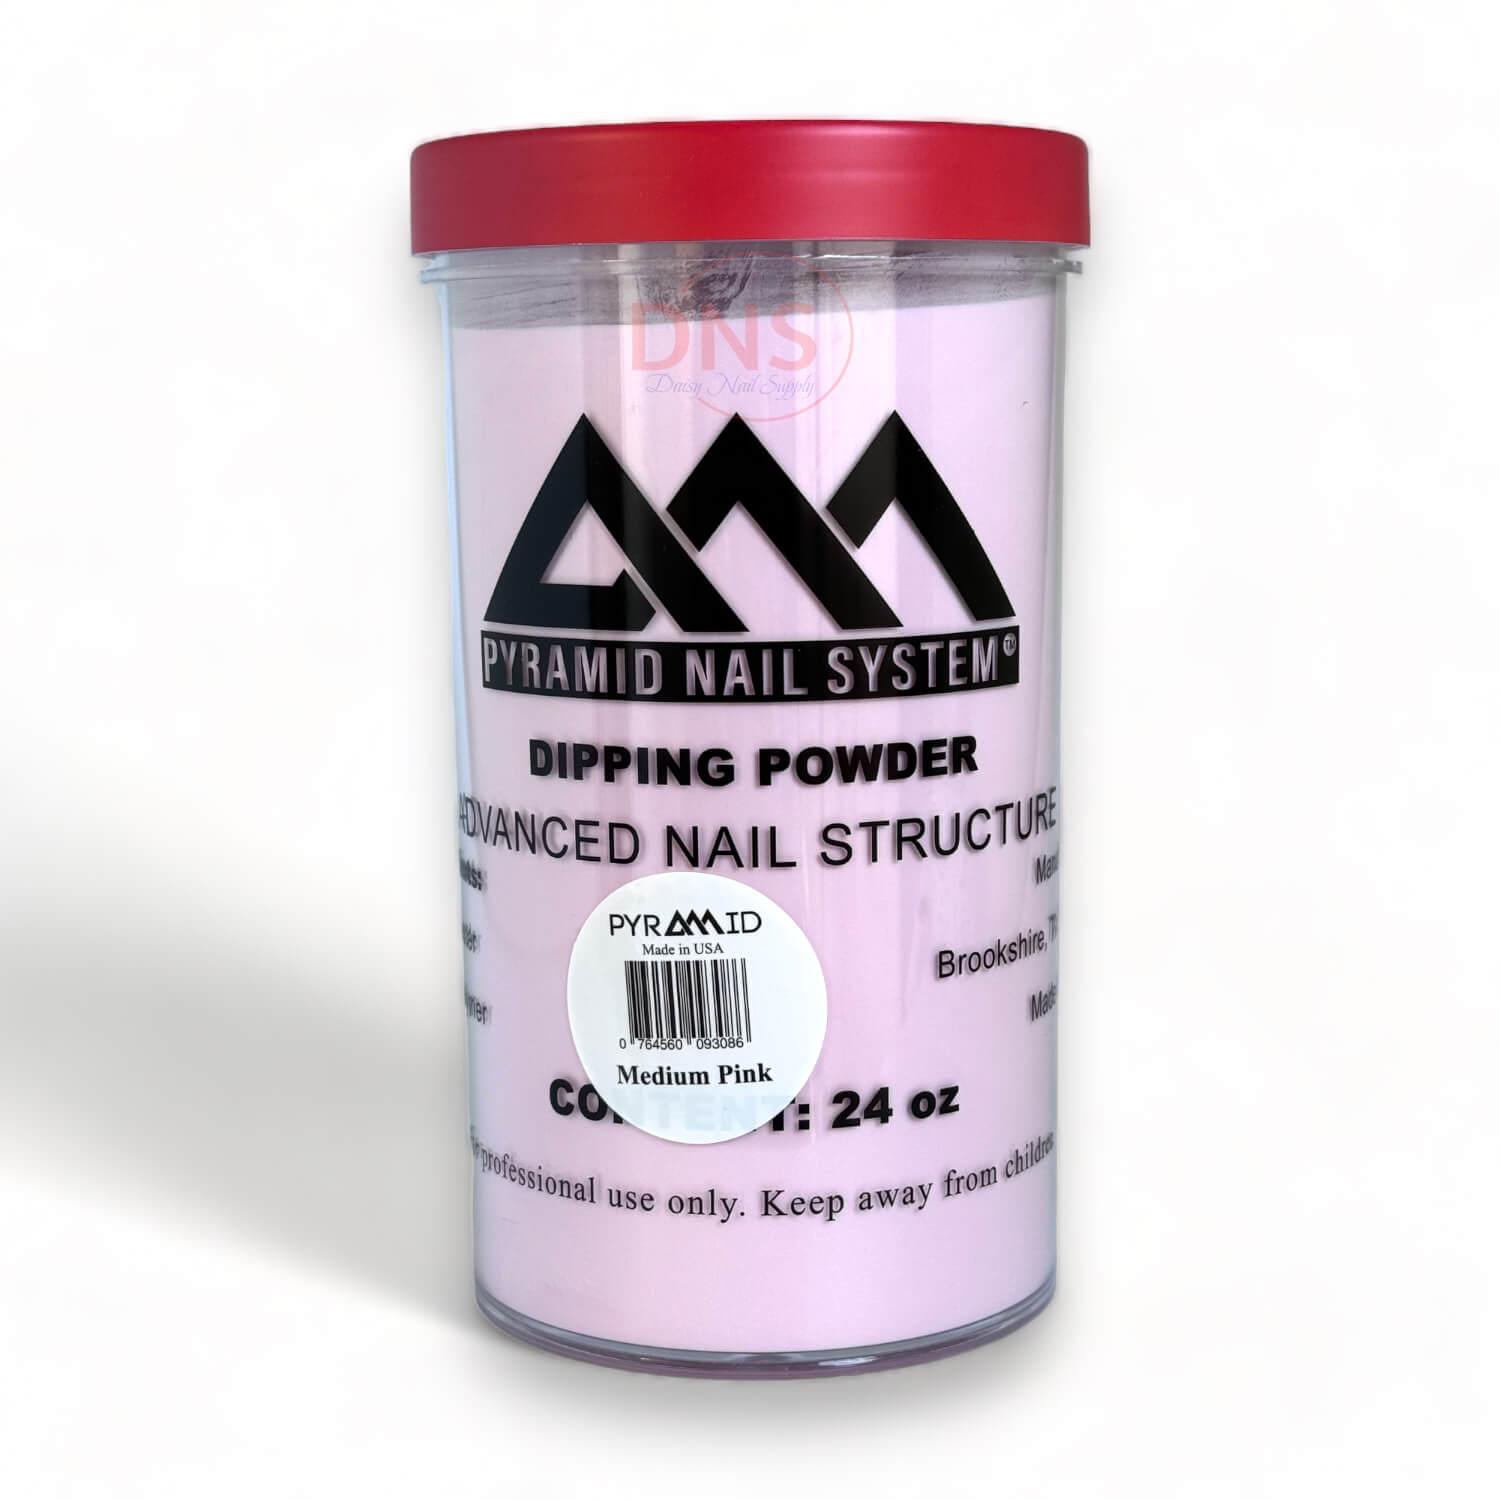 Pyramid Dip Powder Refill 24 Oz - Medium Pink